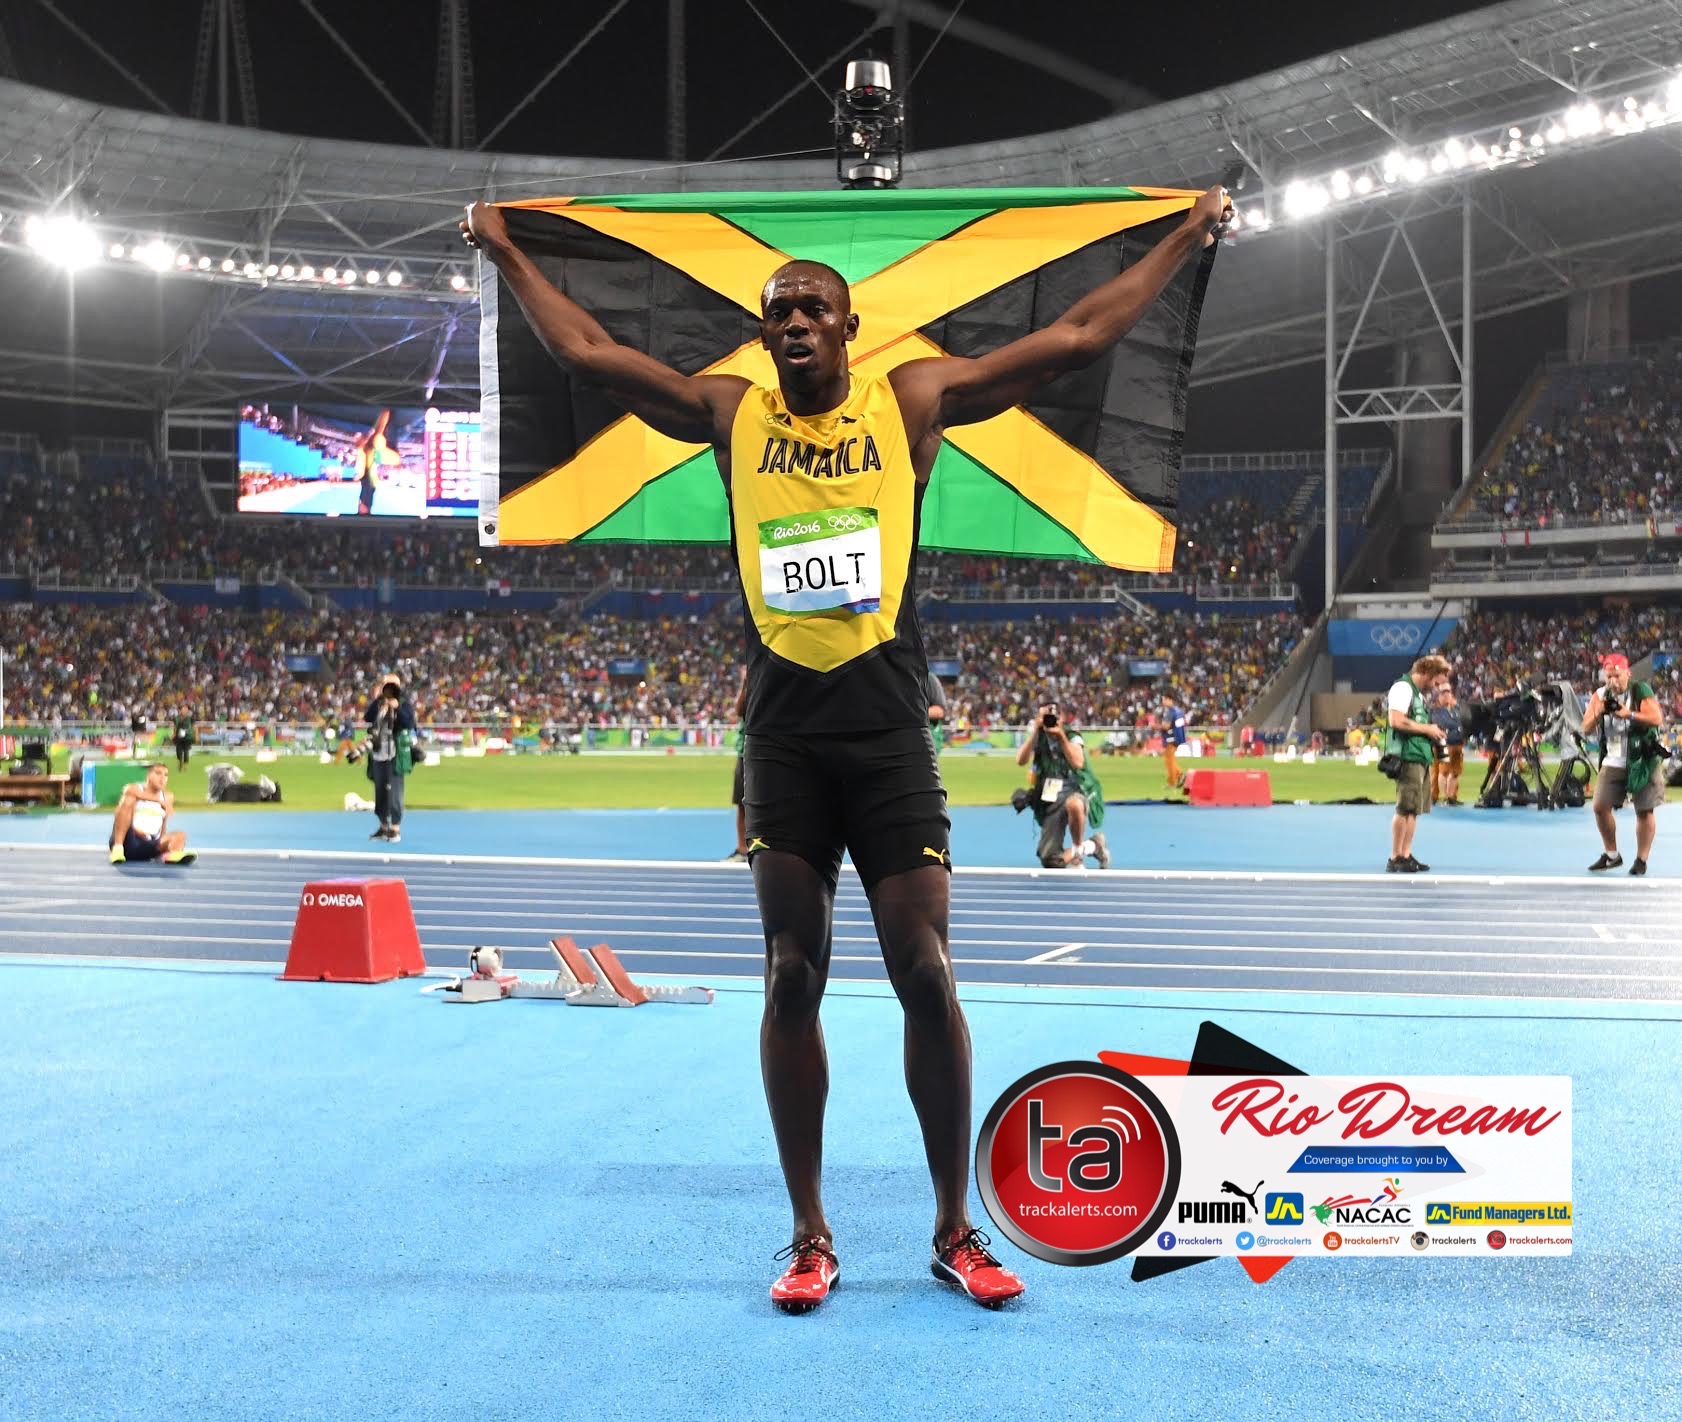 Historic #Rio2016 for Jamaica